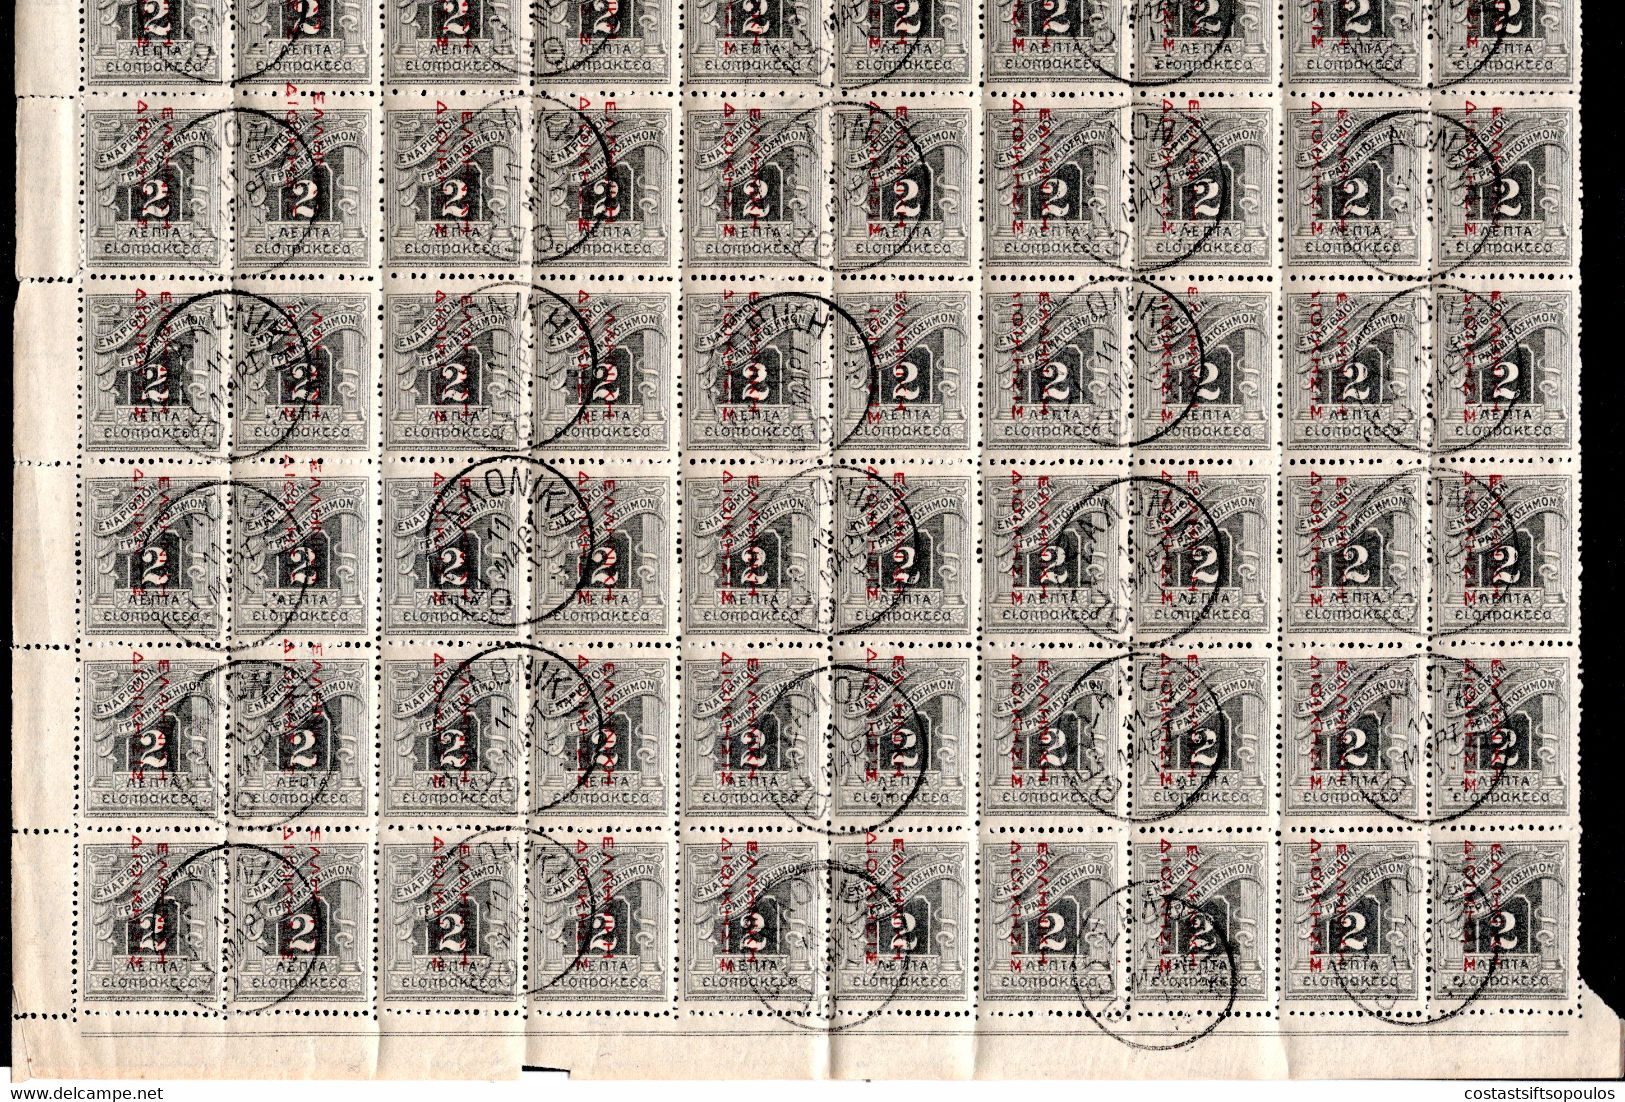 301.GREECE.1912 HELLAS D76 AND VARIETIES,HELLENIC ADM.2L.SHEET OF 100 C.T.O. SALONIQUE,CATALOGUE VALUE OVER EURO 1000 - Gebruikt